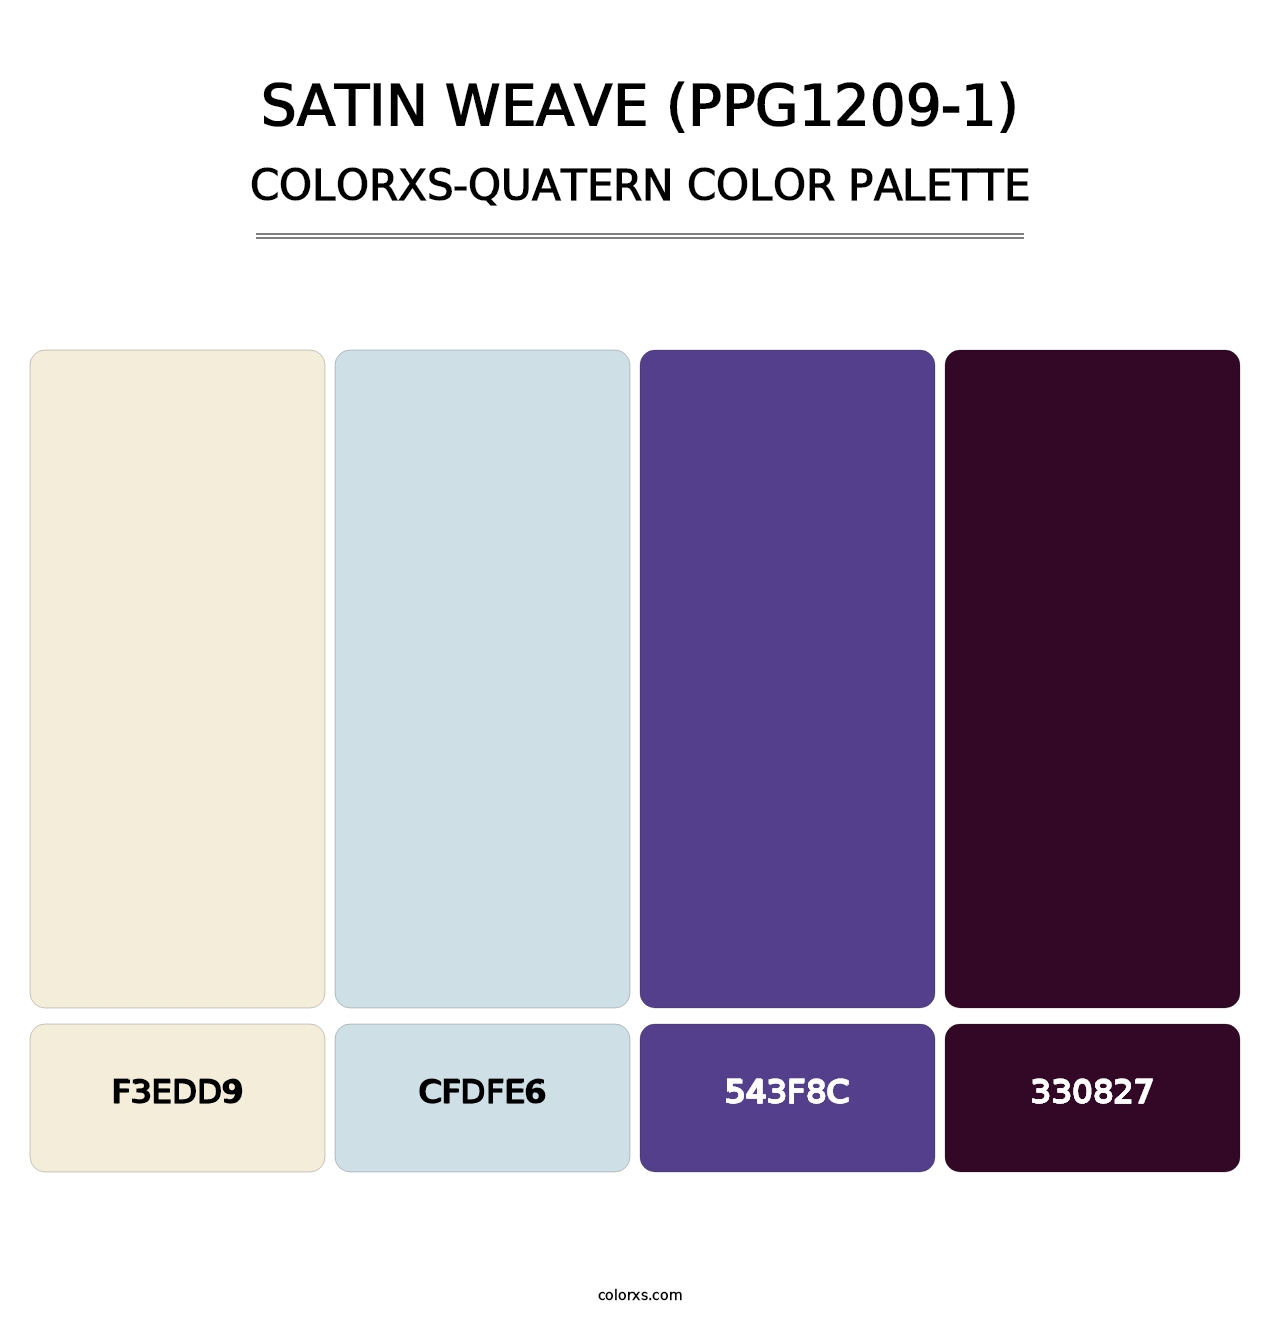 Satin Weave (PPG1209-1) - Colorxs Quatern Palette